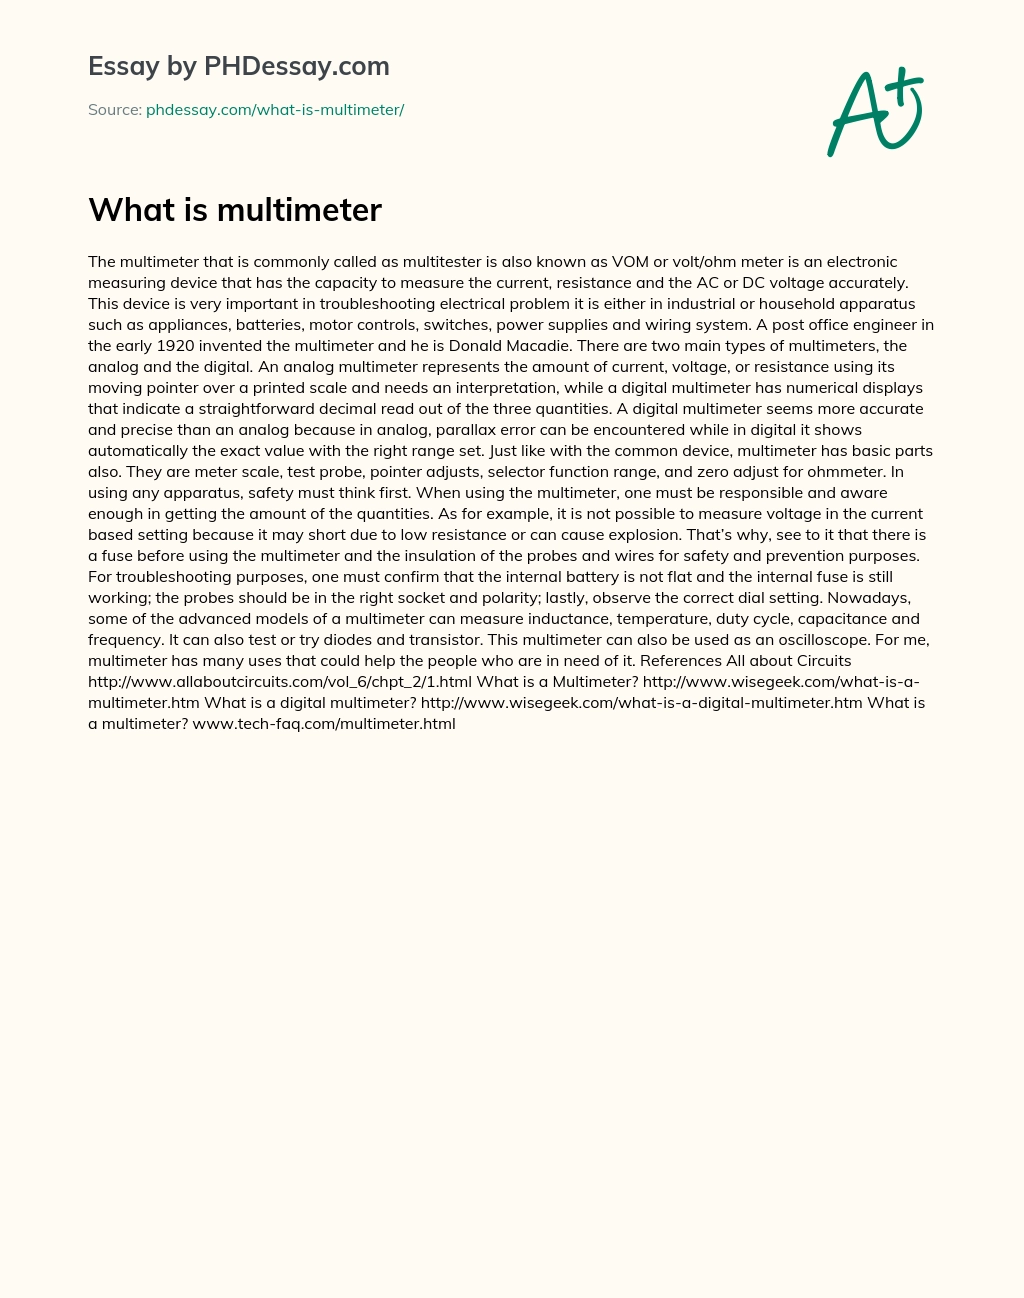 What is multimeter essay